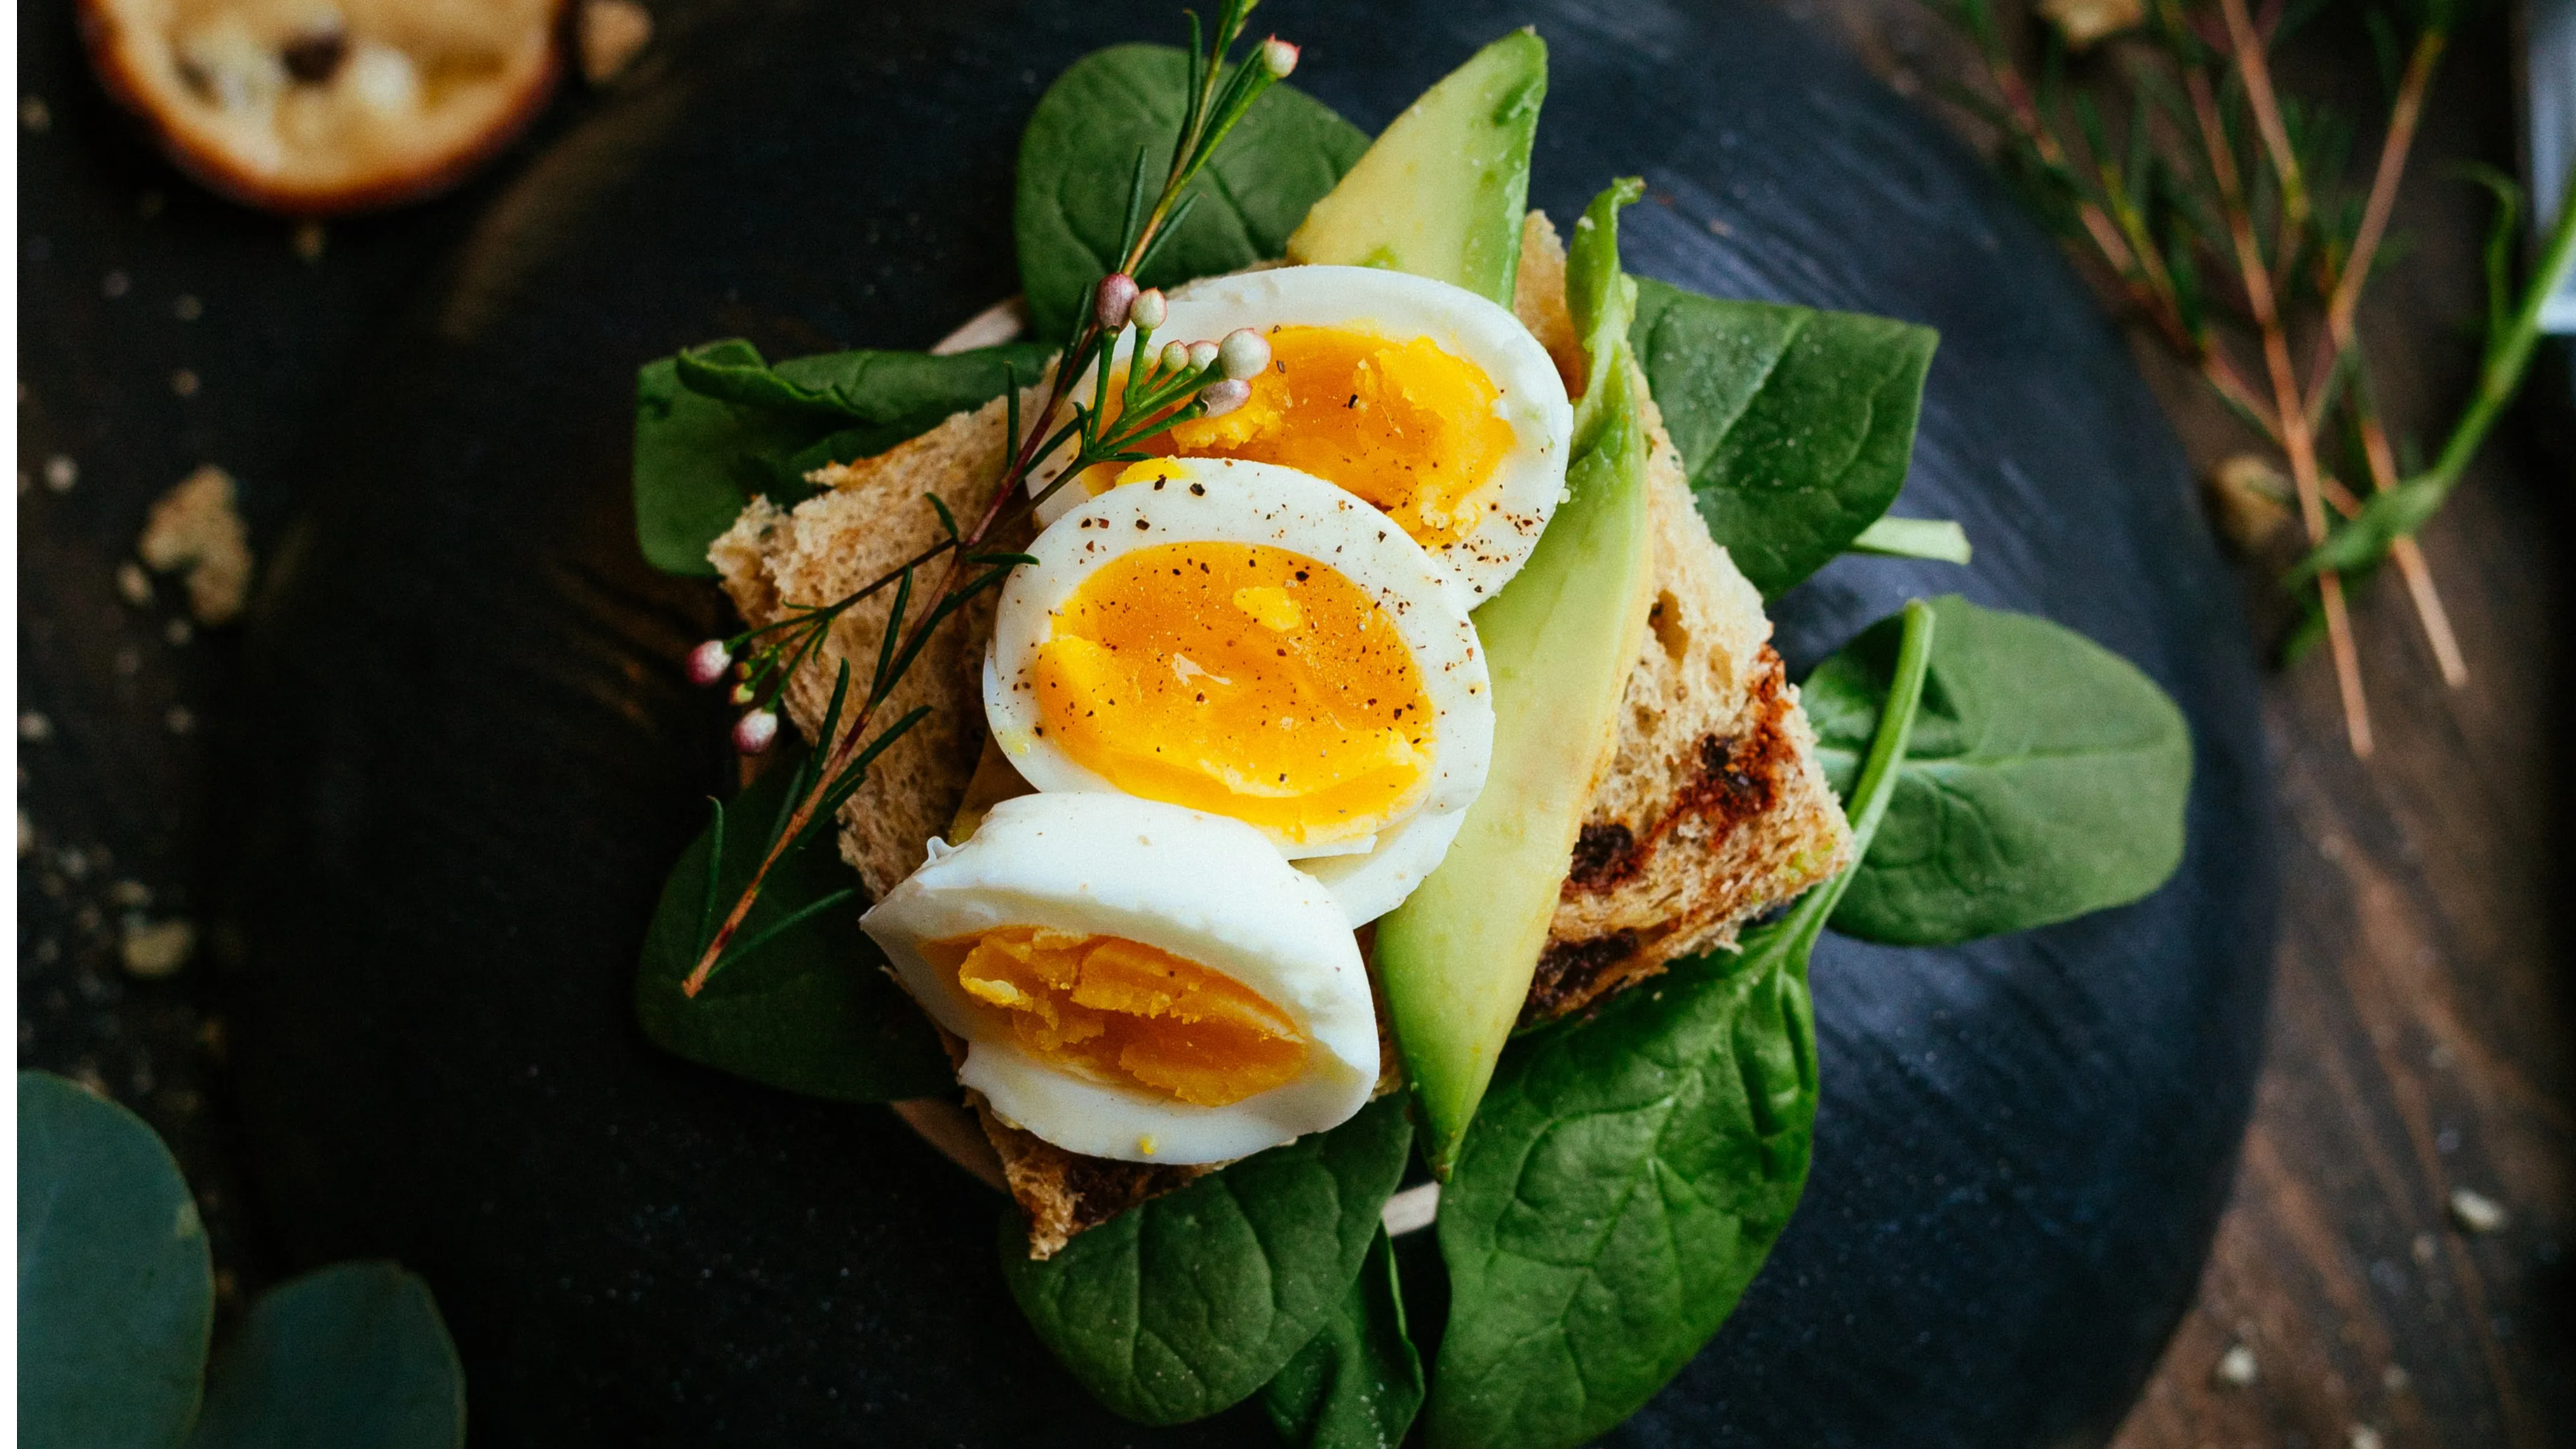 Boiled egg diet: Experts warn eating excess eggs not an ‘eggcelent’ idea